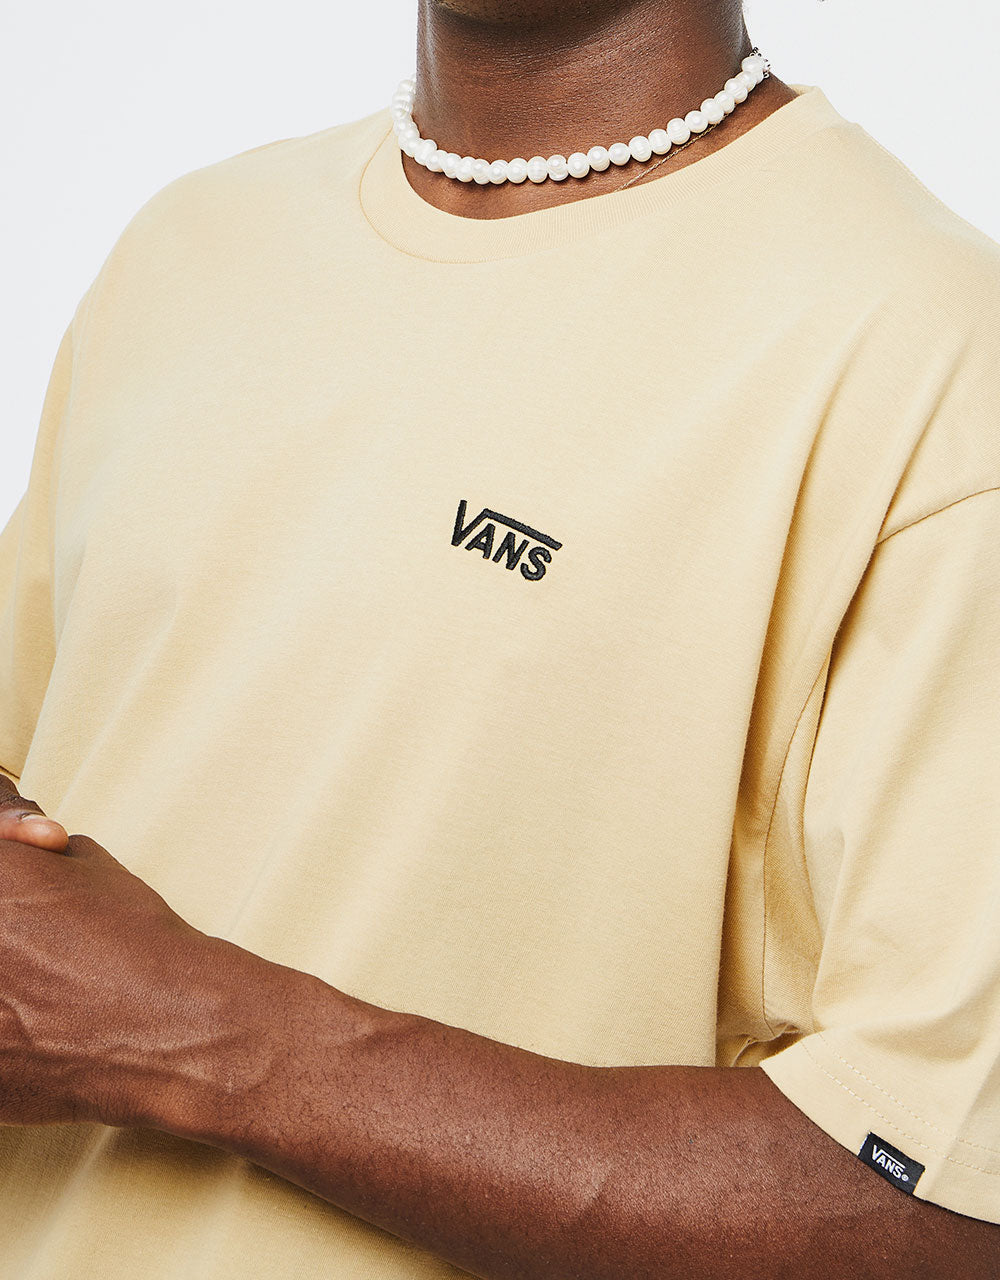 Vans Left Chest Logo T-Shirt - Taos Taupe